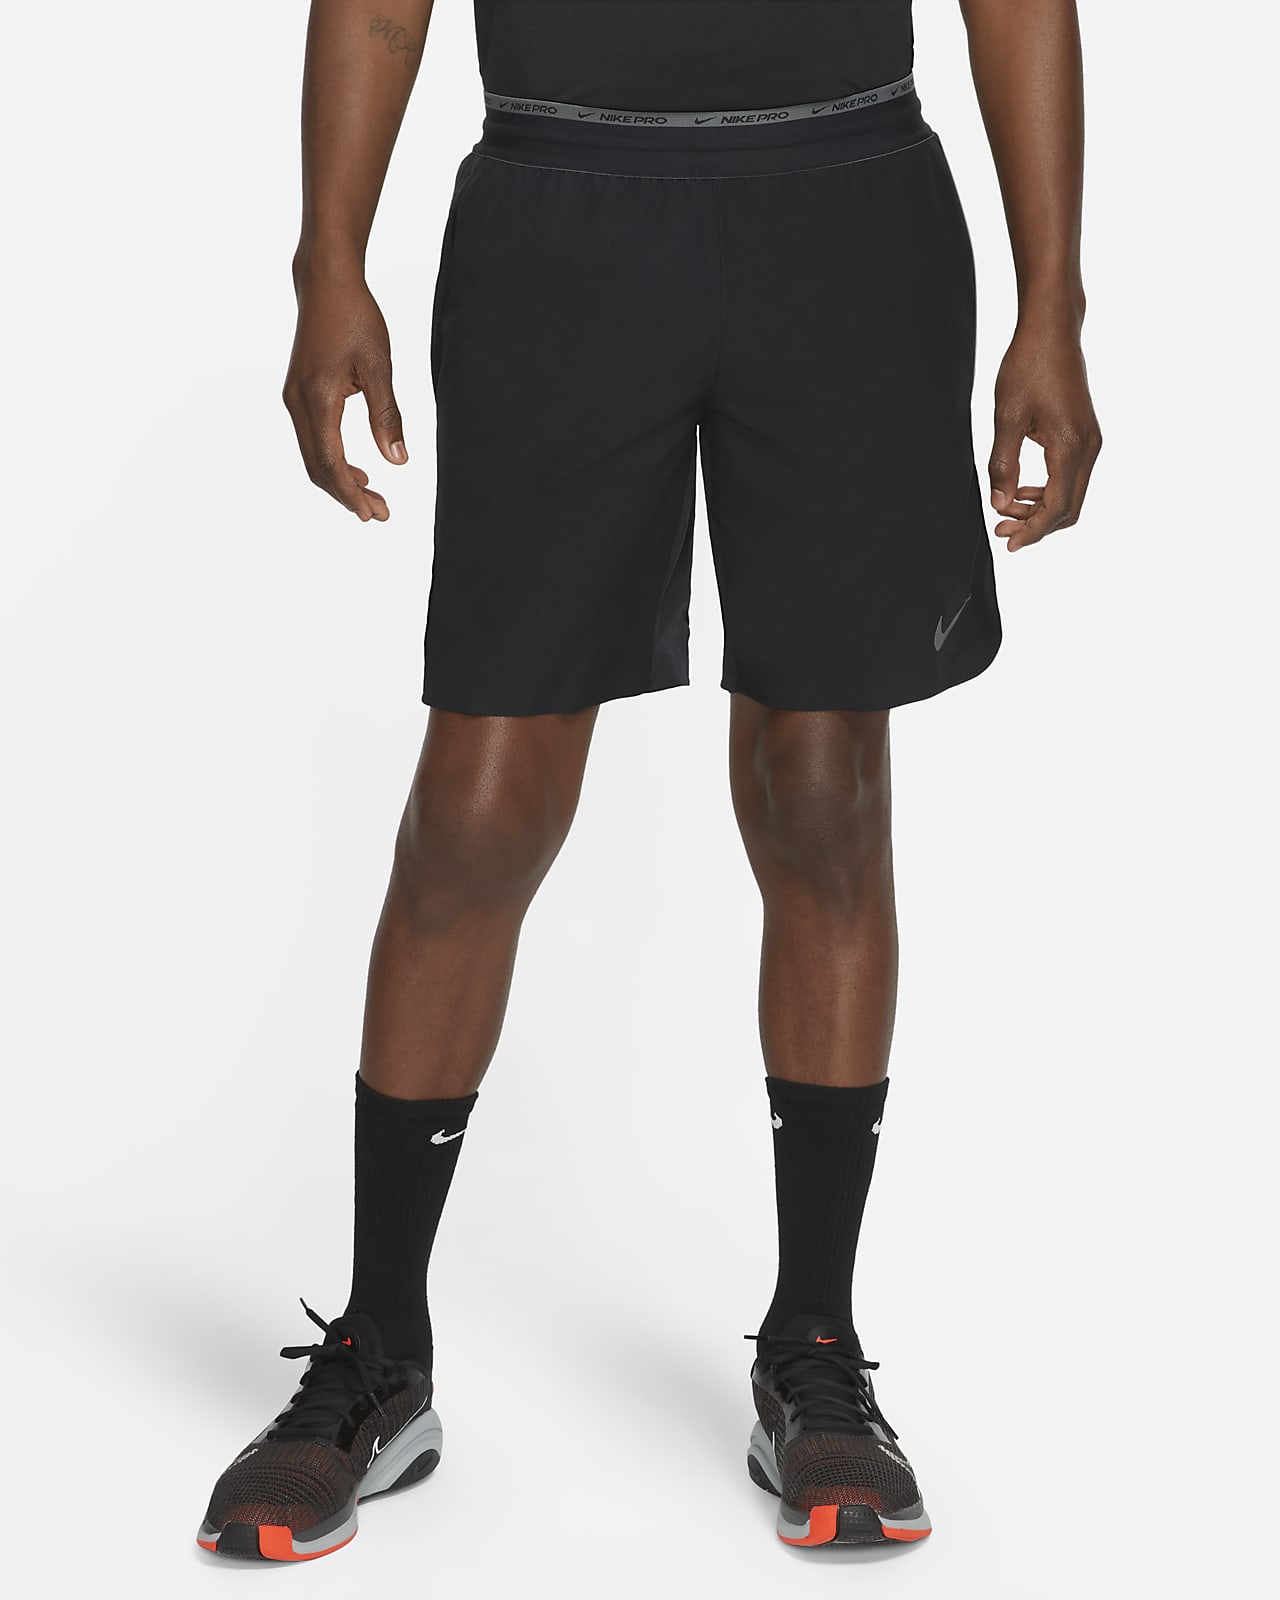 Nike Dri-FIT Flex Rep Pro Collection Herren-Trainingsshorts ohne Futter (ca. 20 cm)